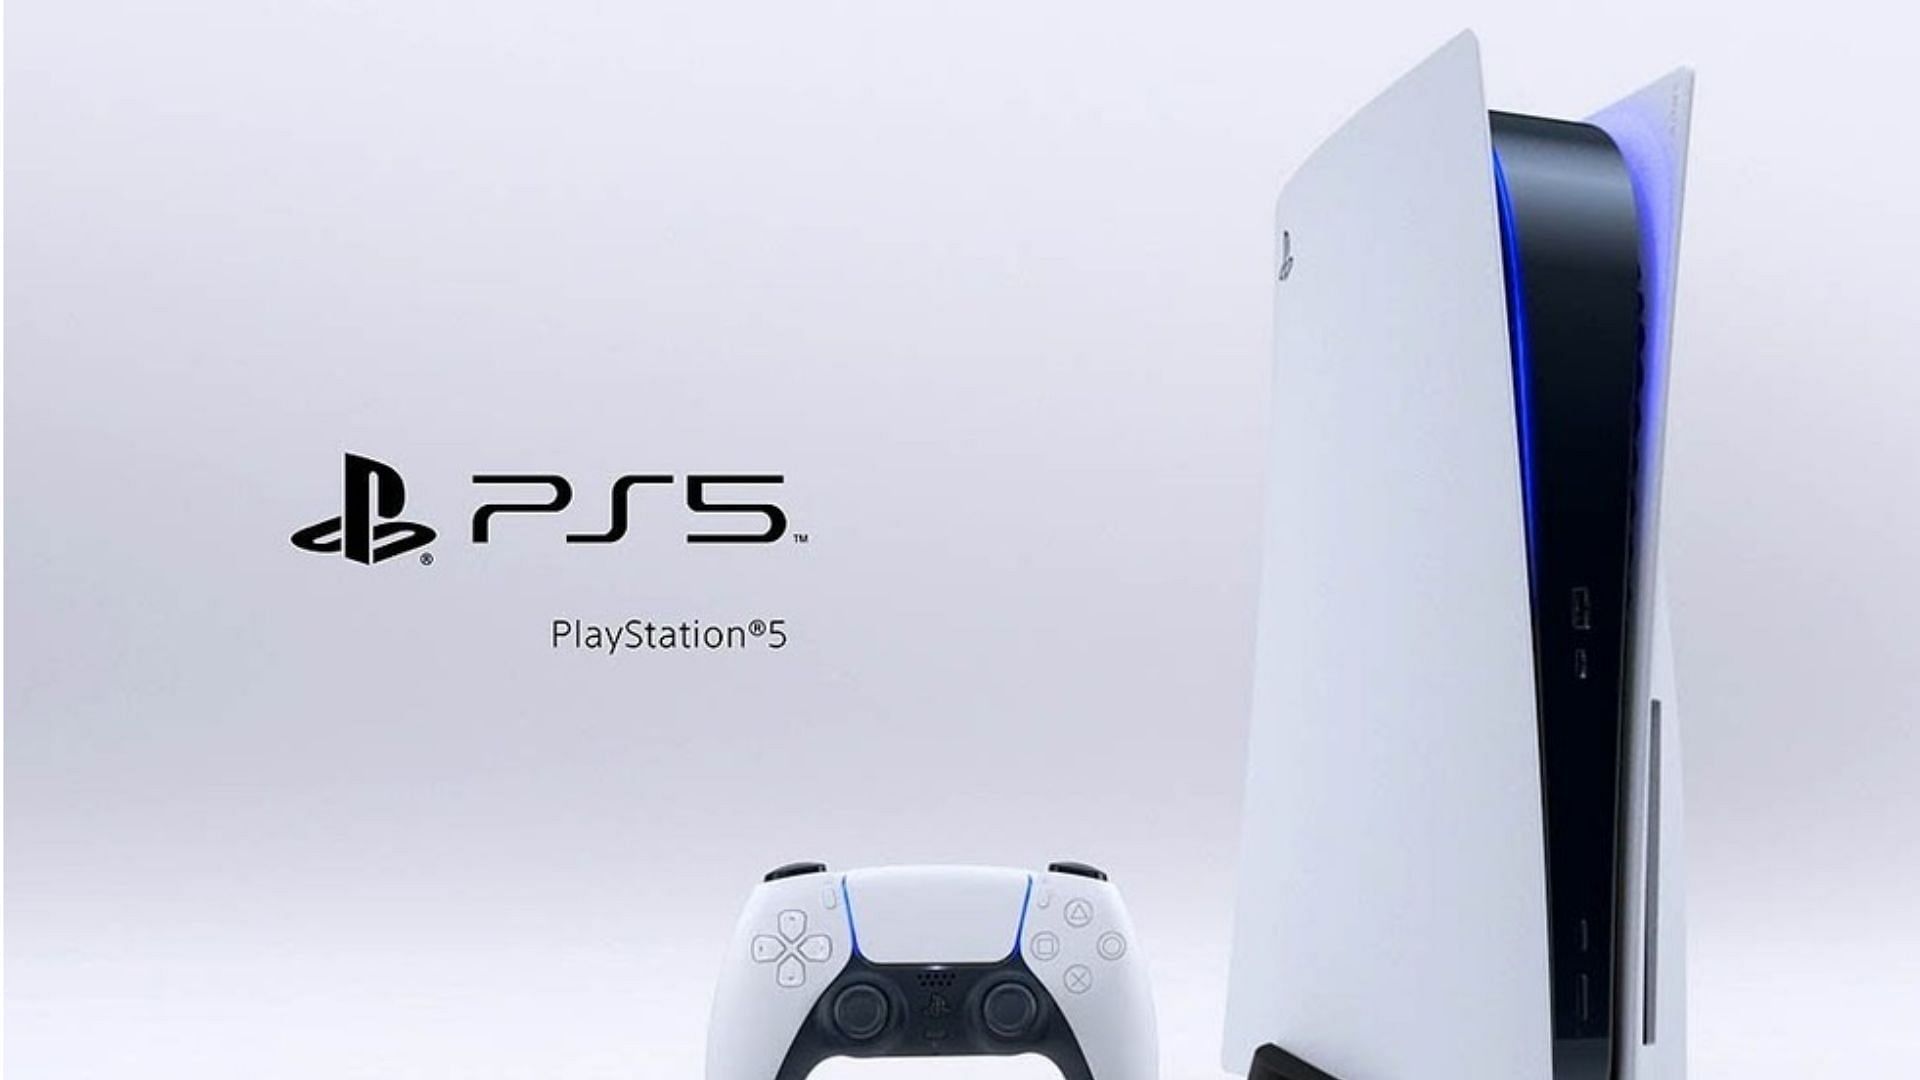 The Sony PlayStation 5 has sold over 40 million units so far (Image via Sony)